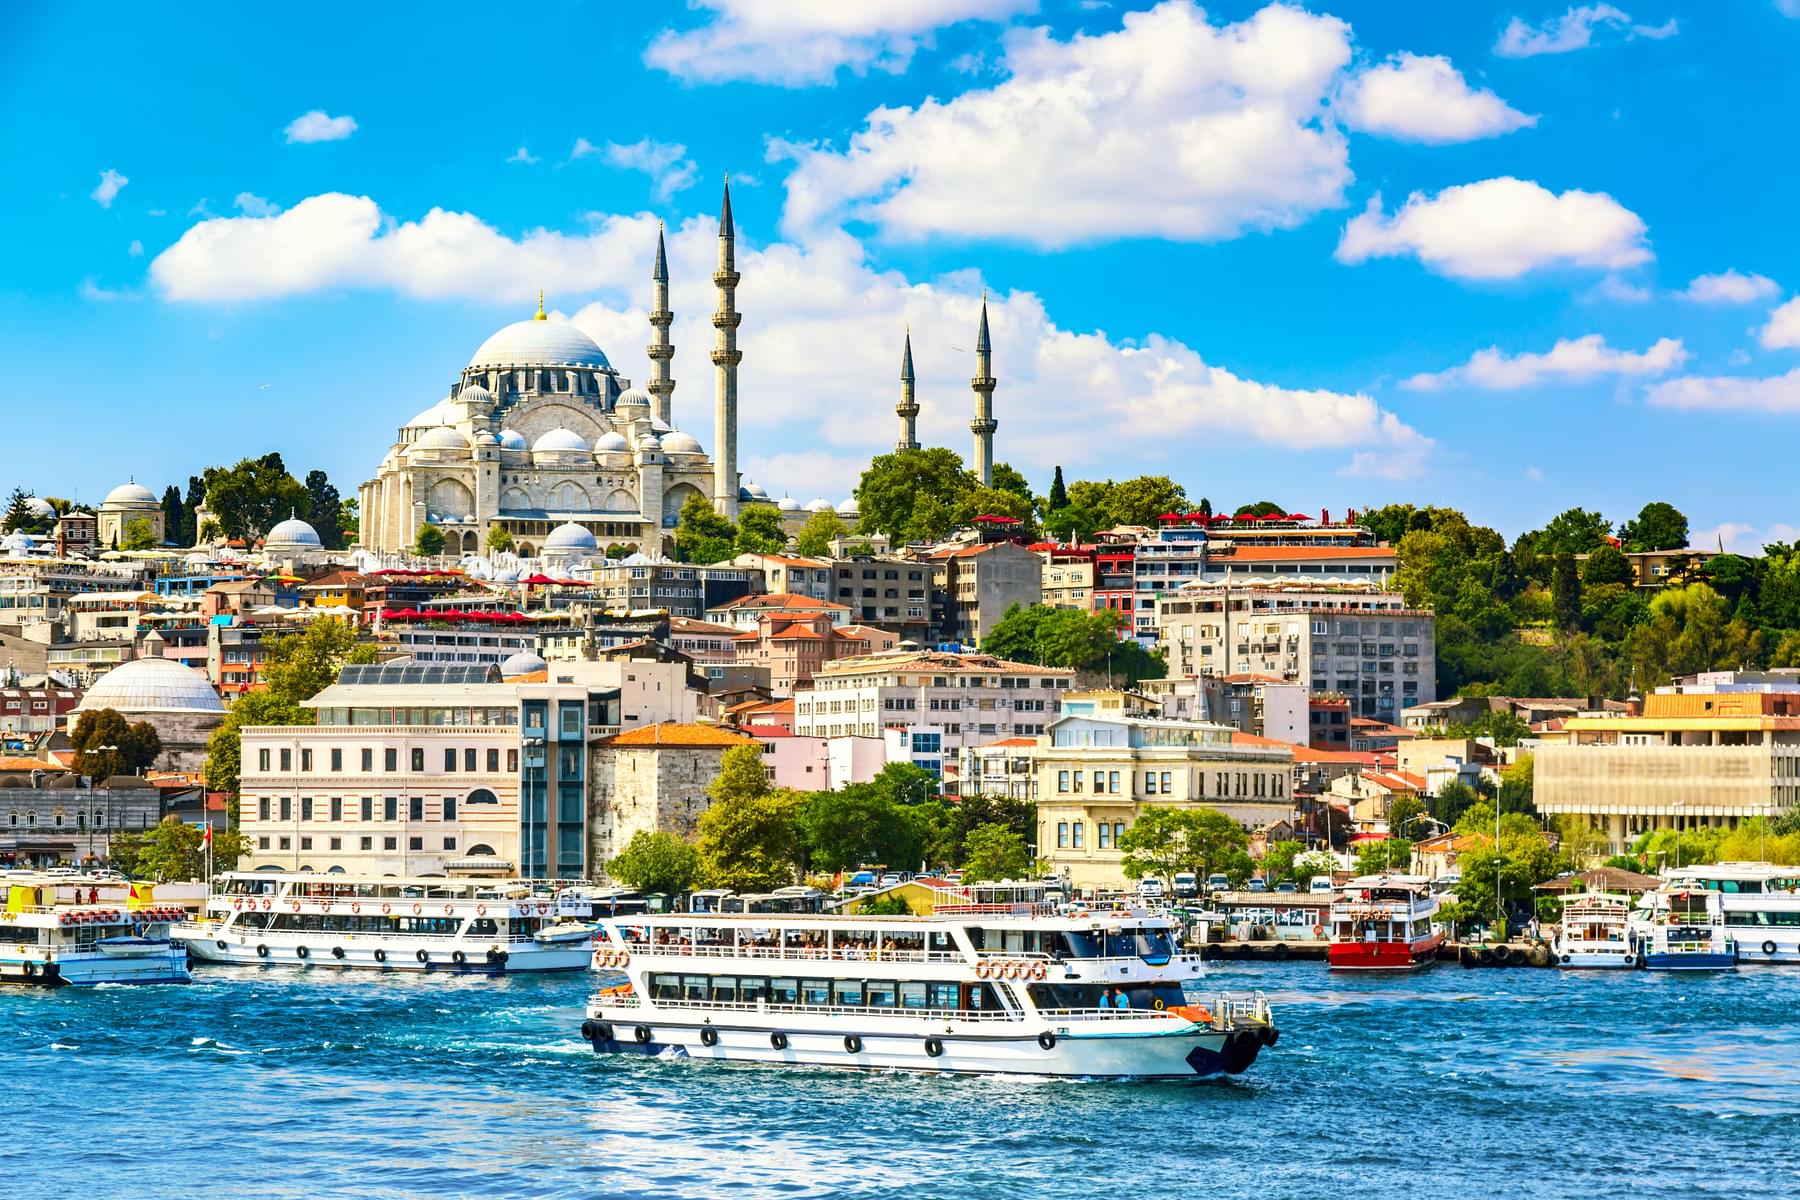 Cruise the Bosphorus Strait